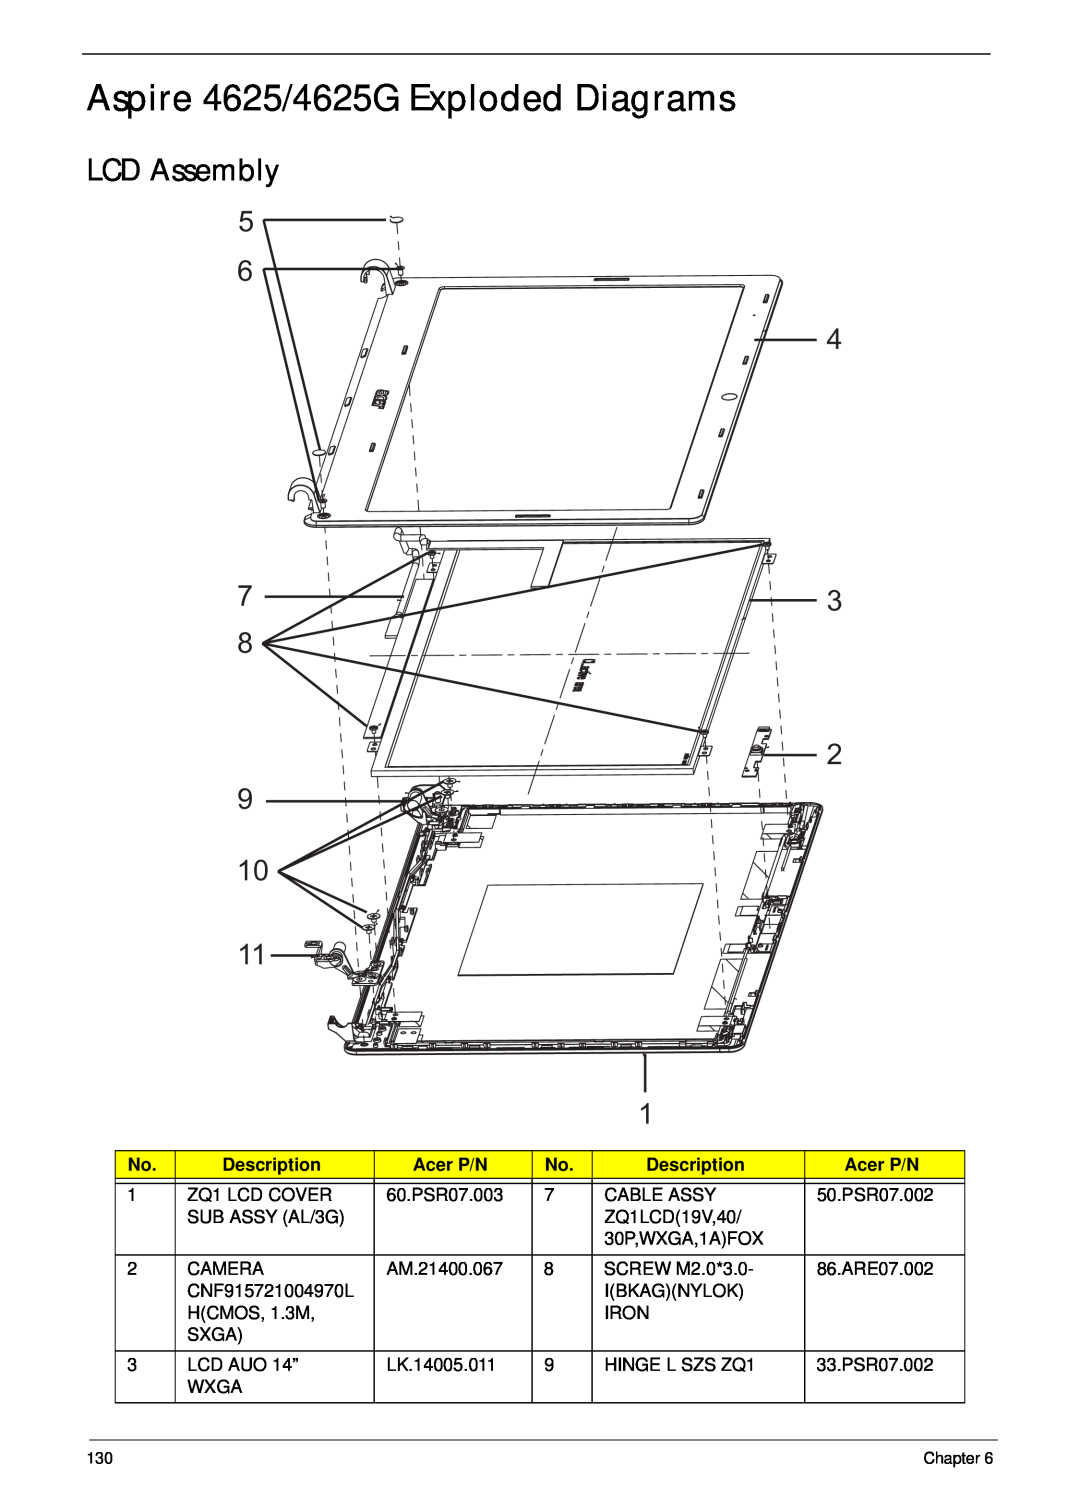 Aspire Digital manual Aspire 4625/4625G Exploded Diagrams, LCD Assembly, Description, Acer P/N 